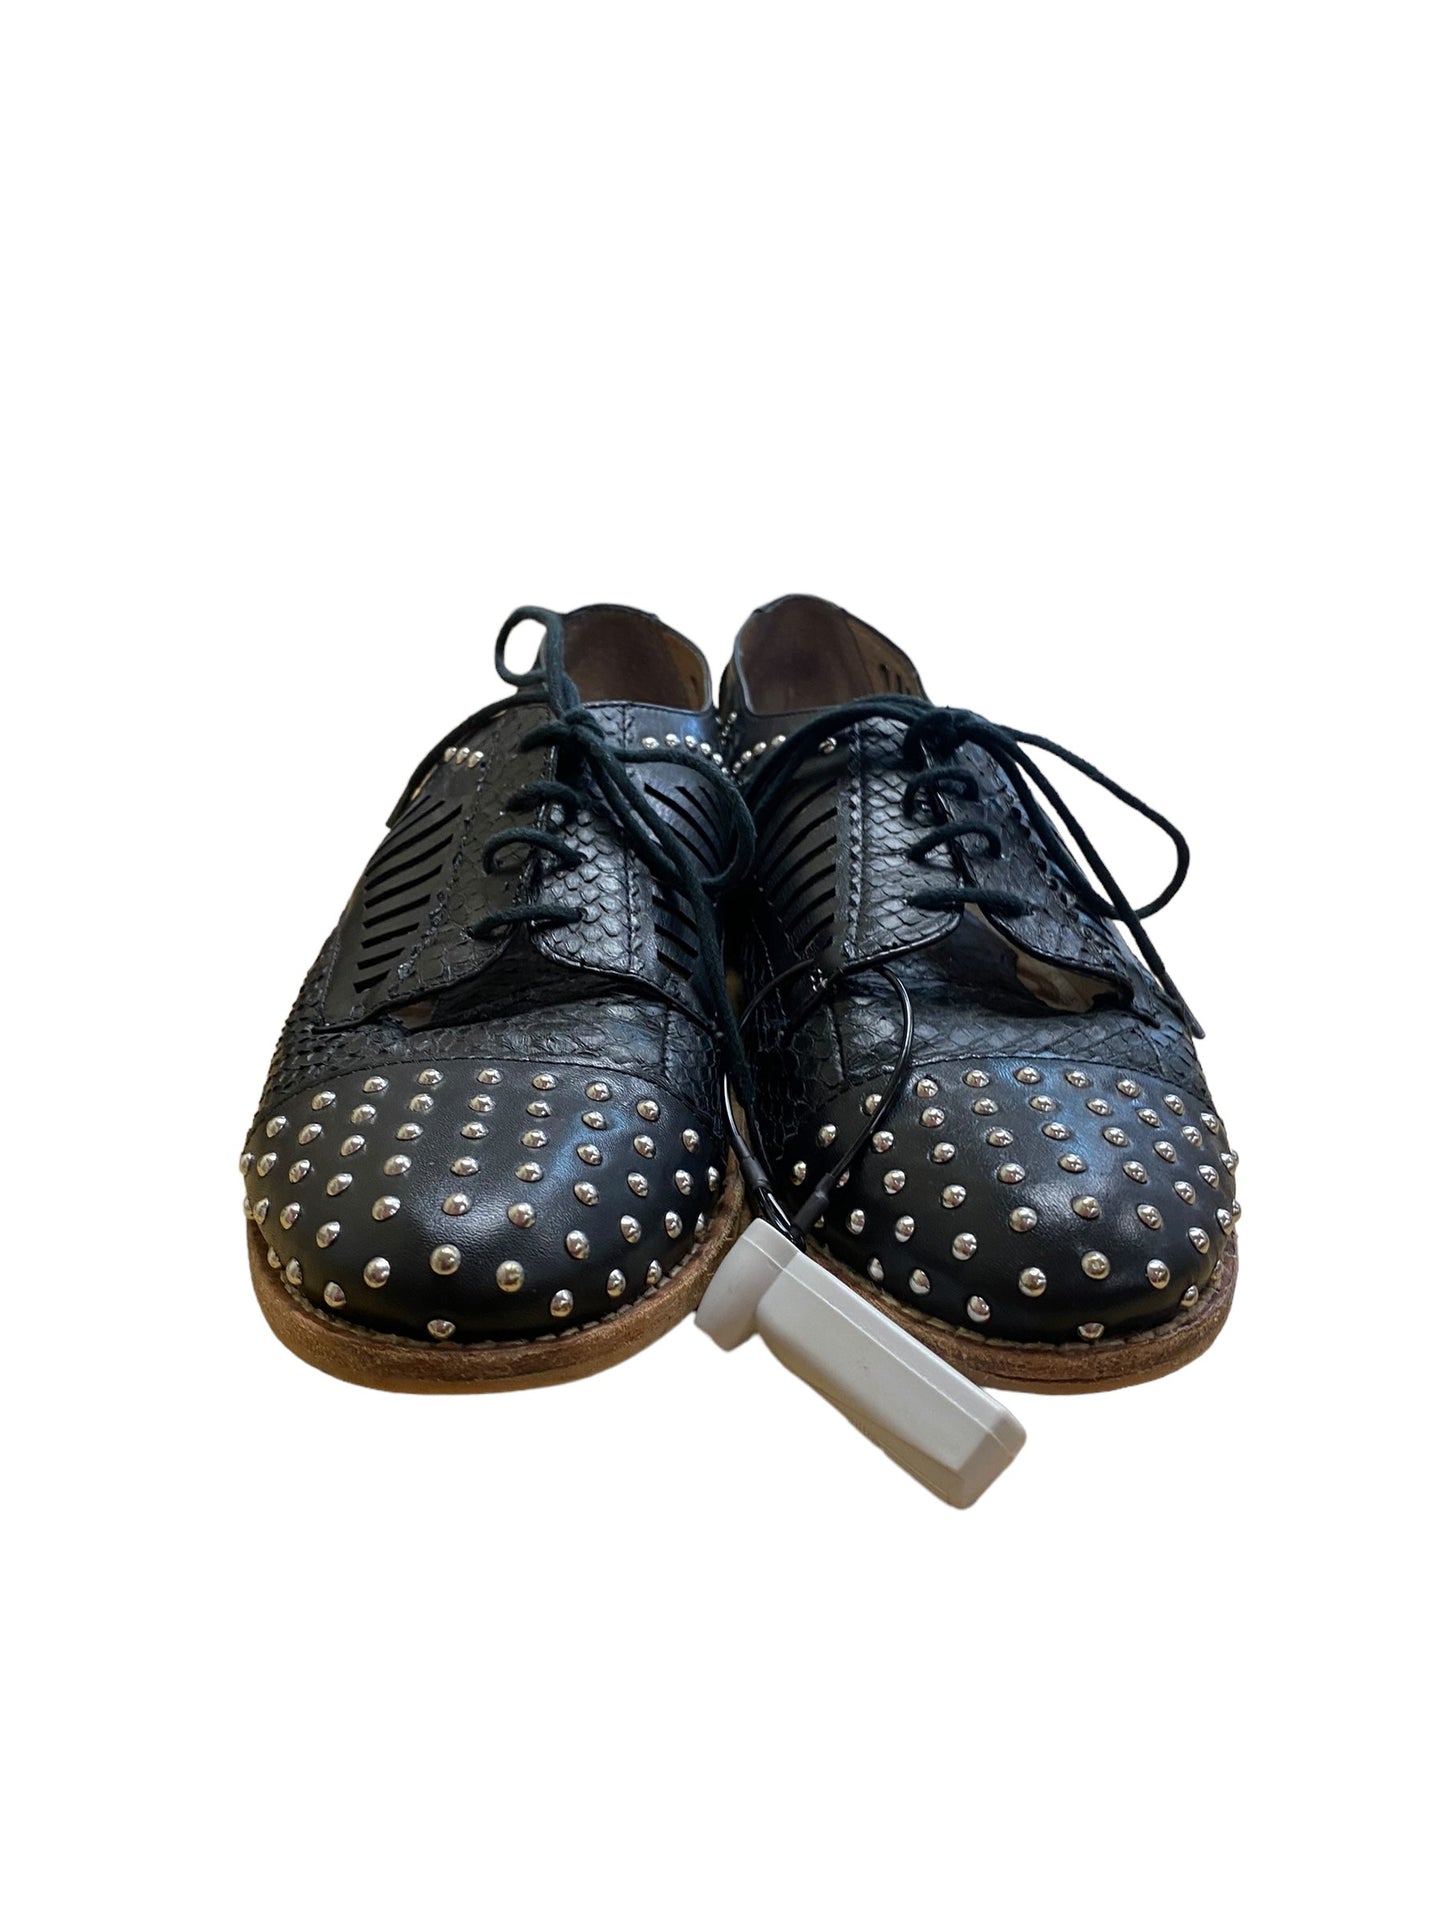 Black Shoes Flats Sam Edelman, Size 8